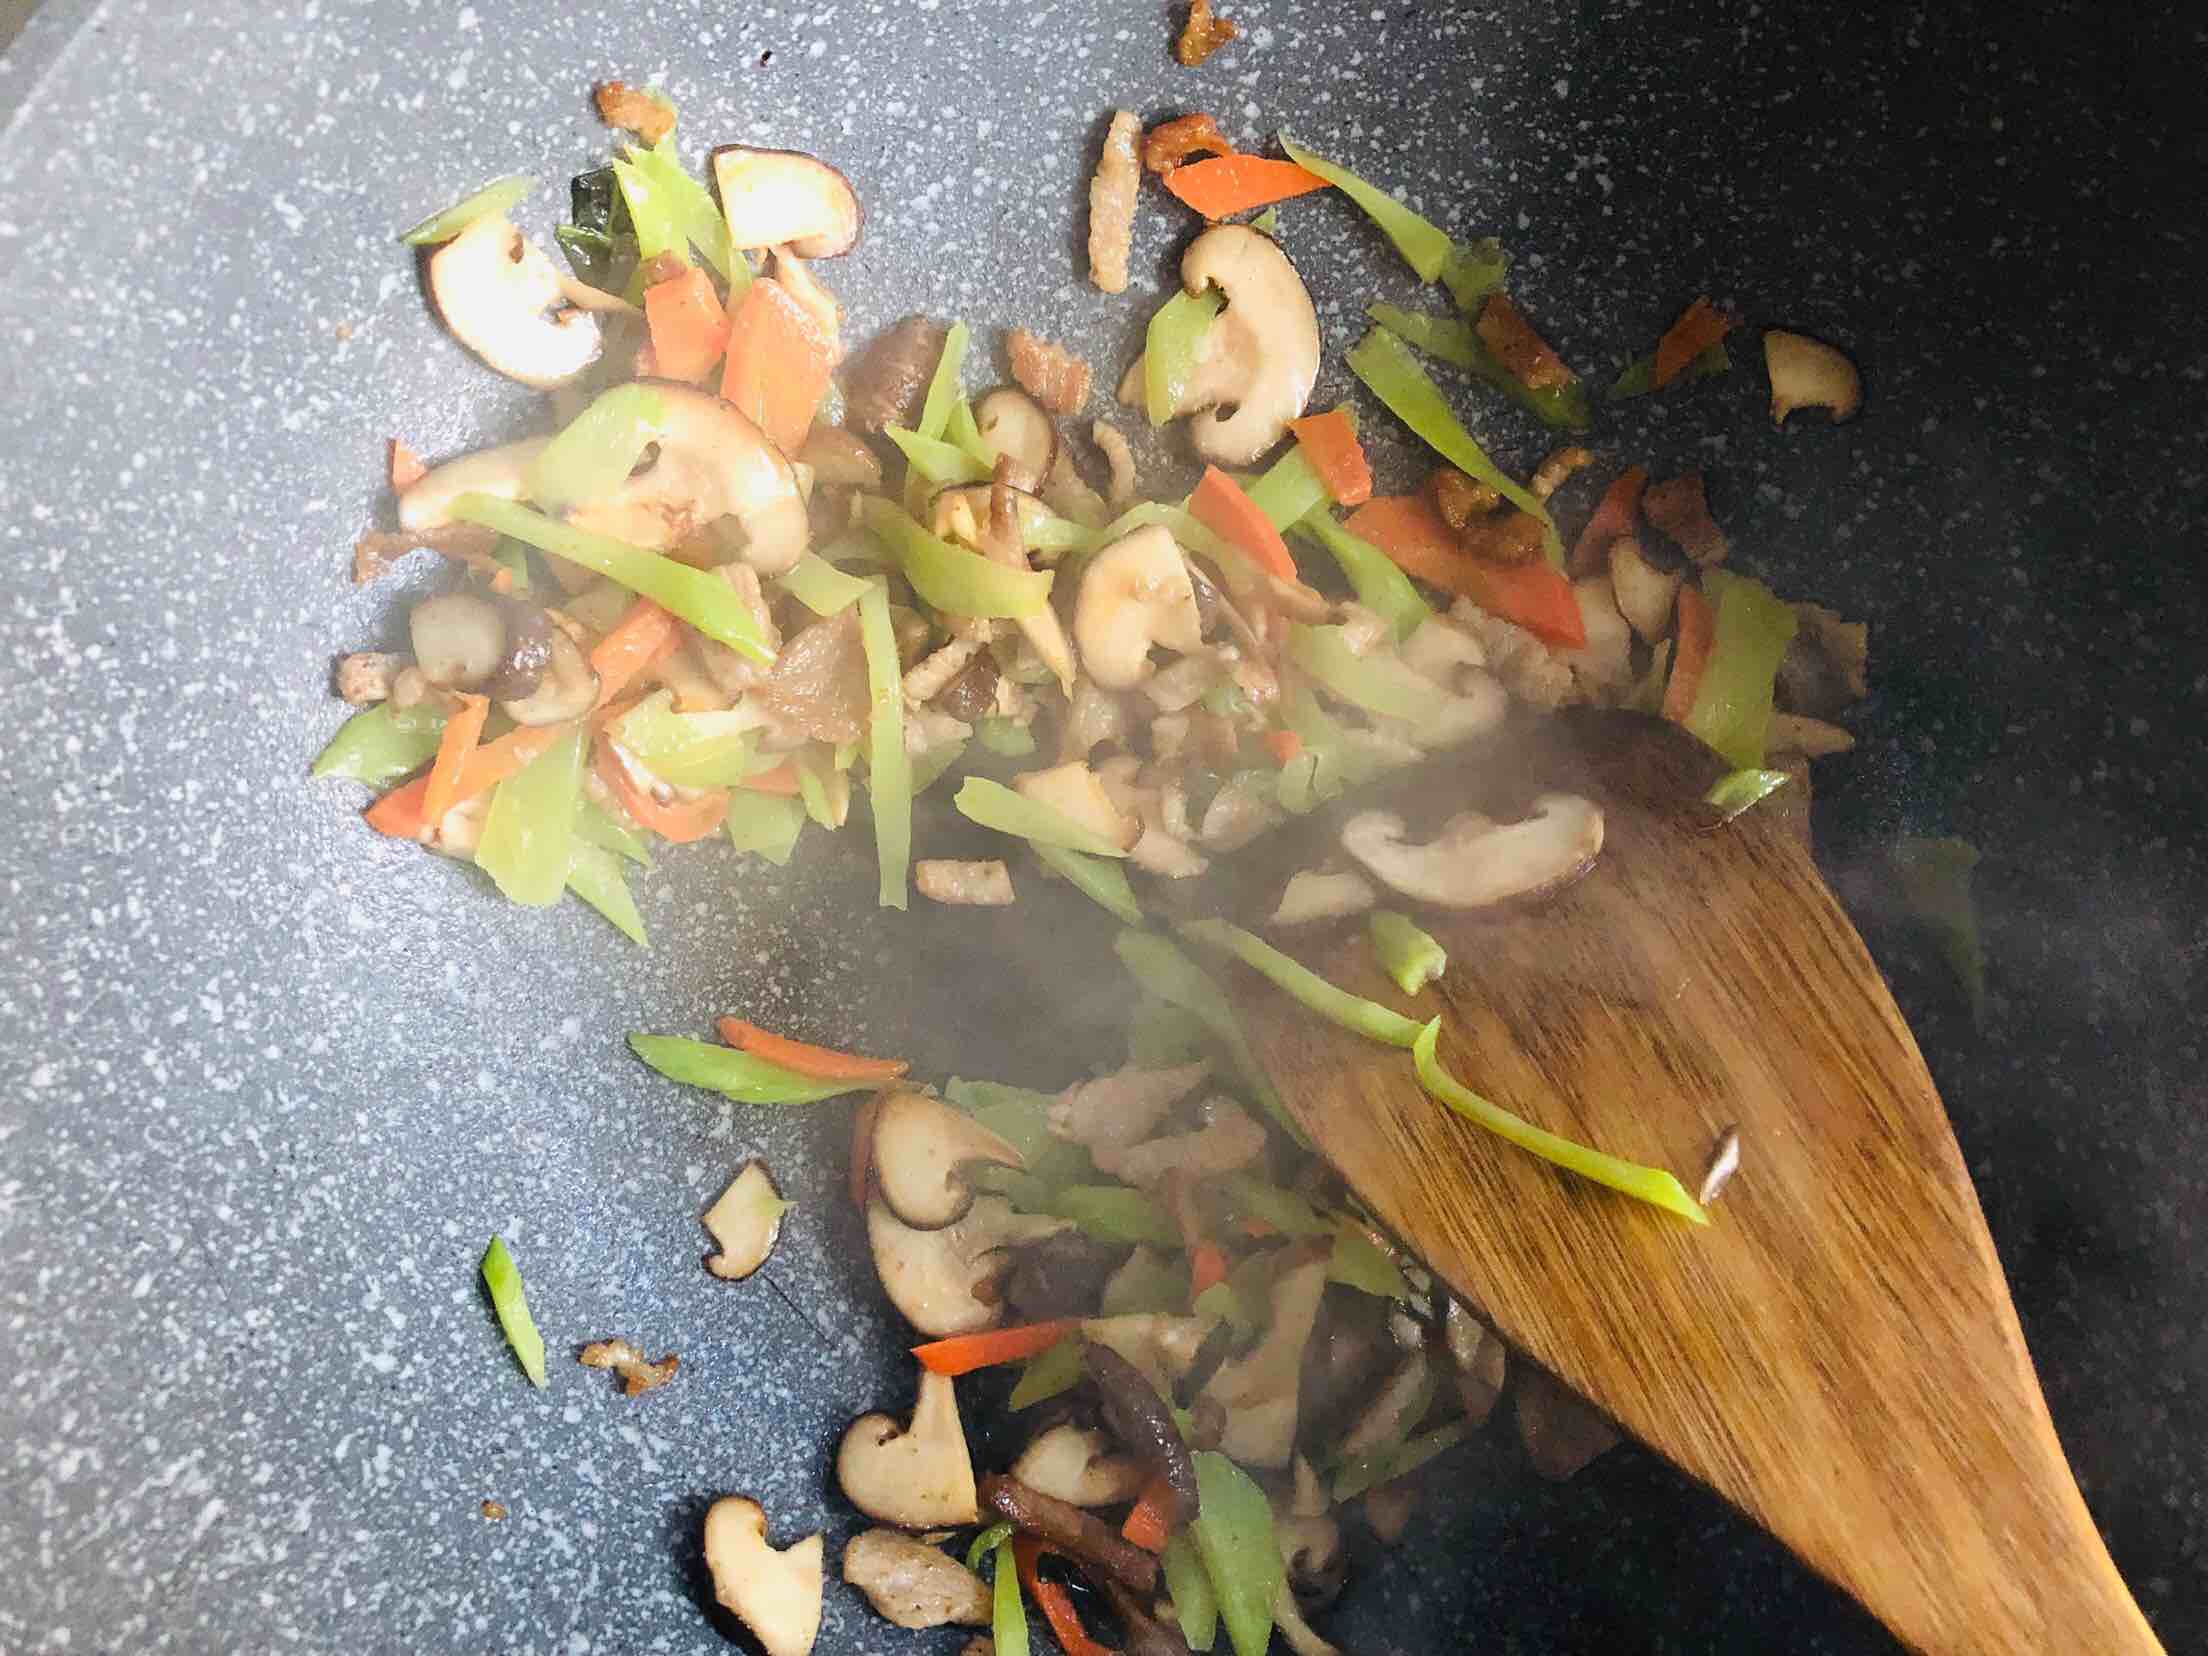 Stir-fried Large Noodles with Seasonal Vegetables recipe